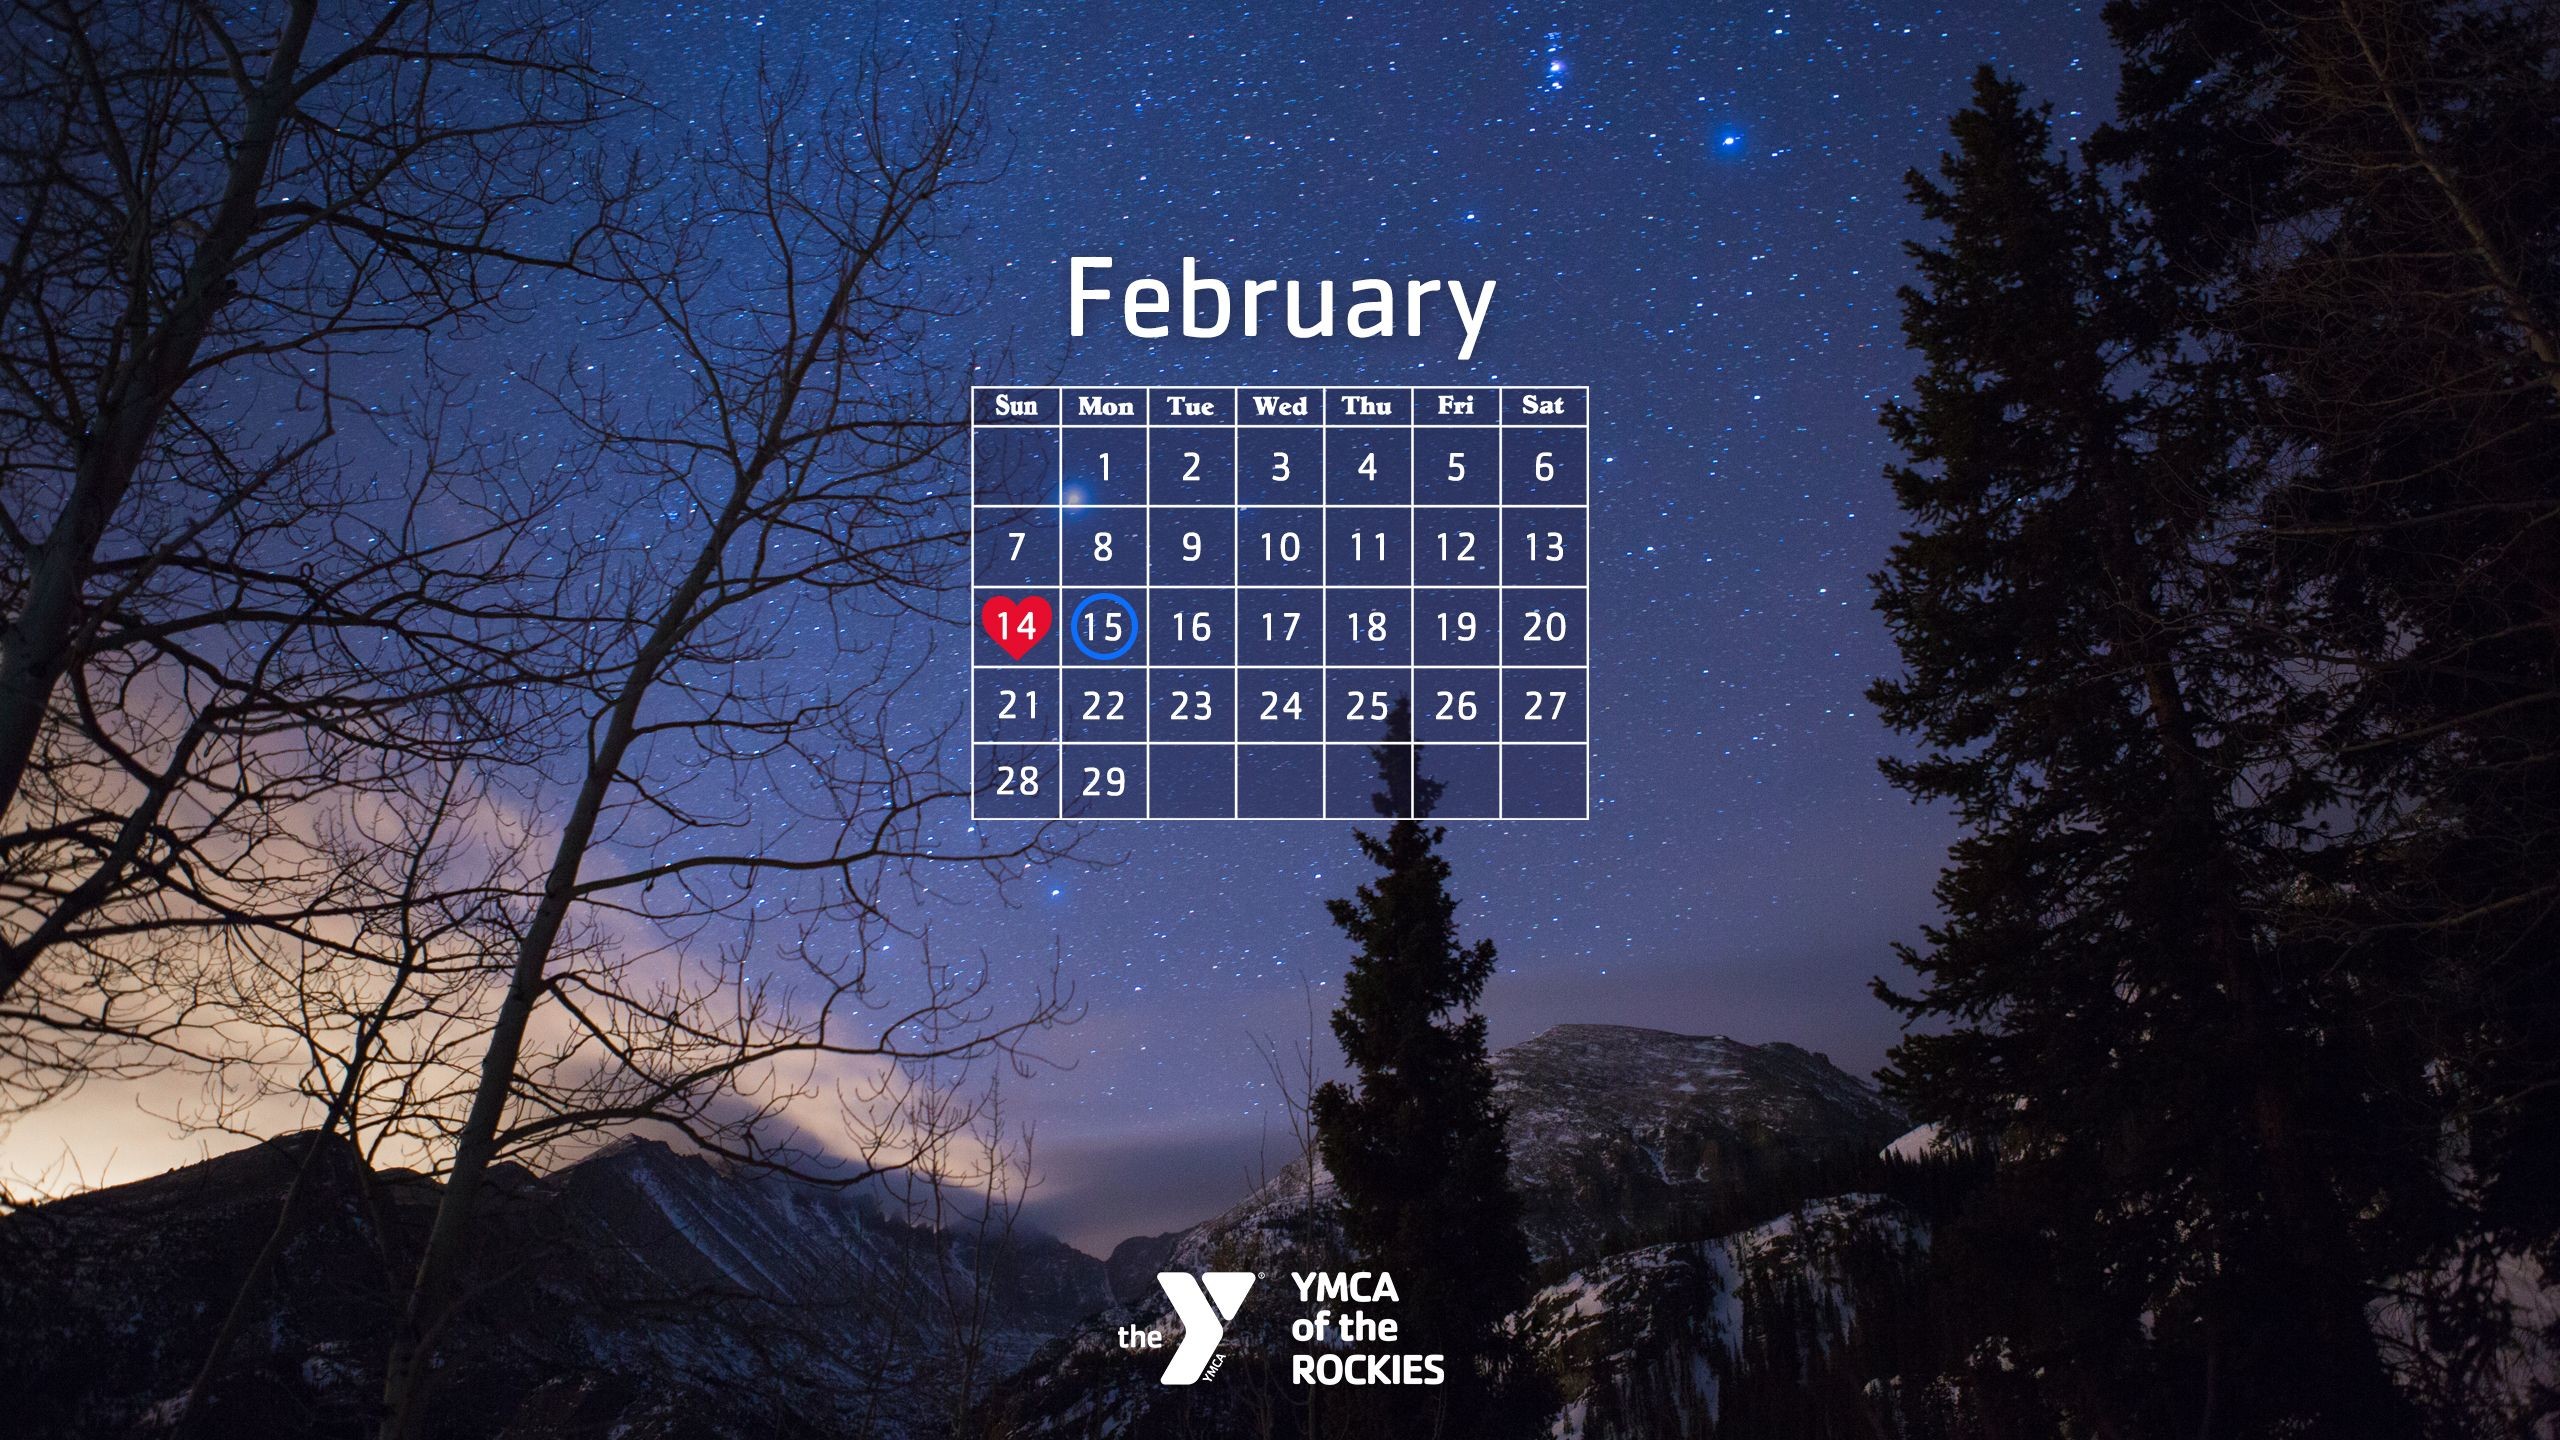 February Wallpaper Calendar Image